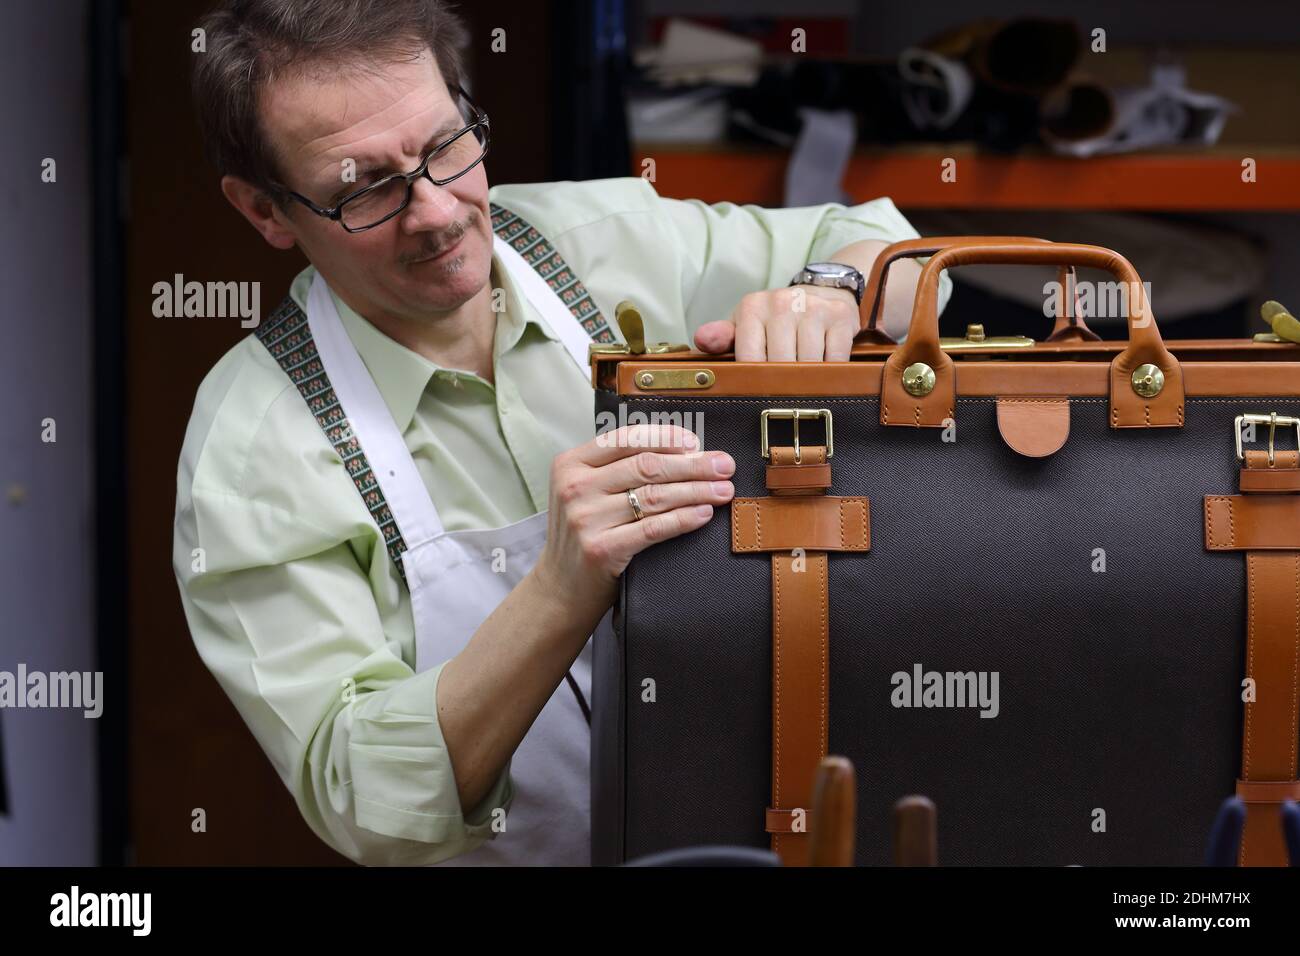 Craftsman making bespoke leather bag Stock Photo